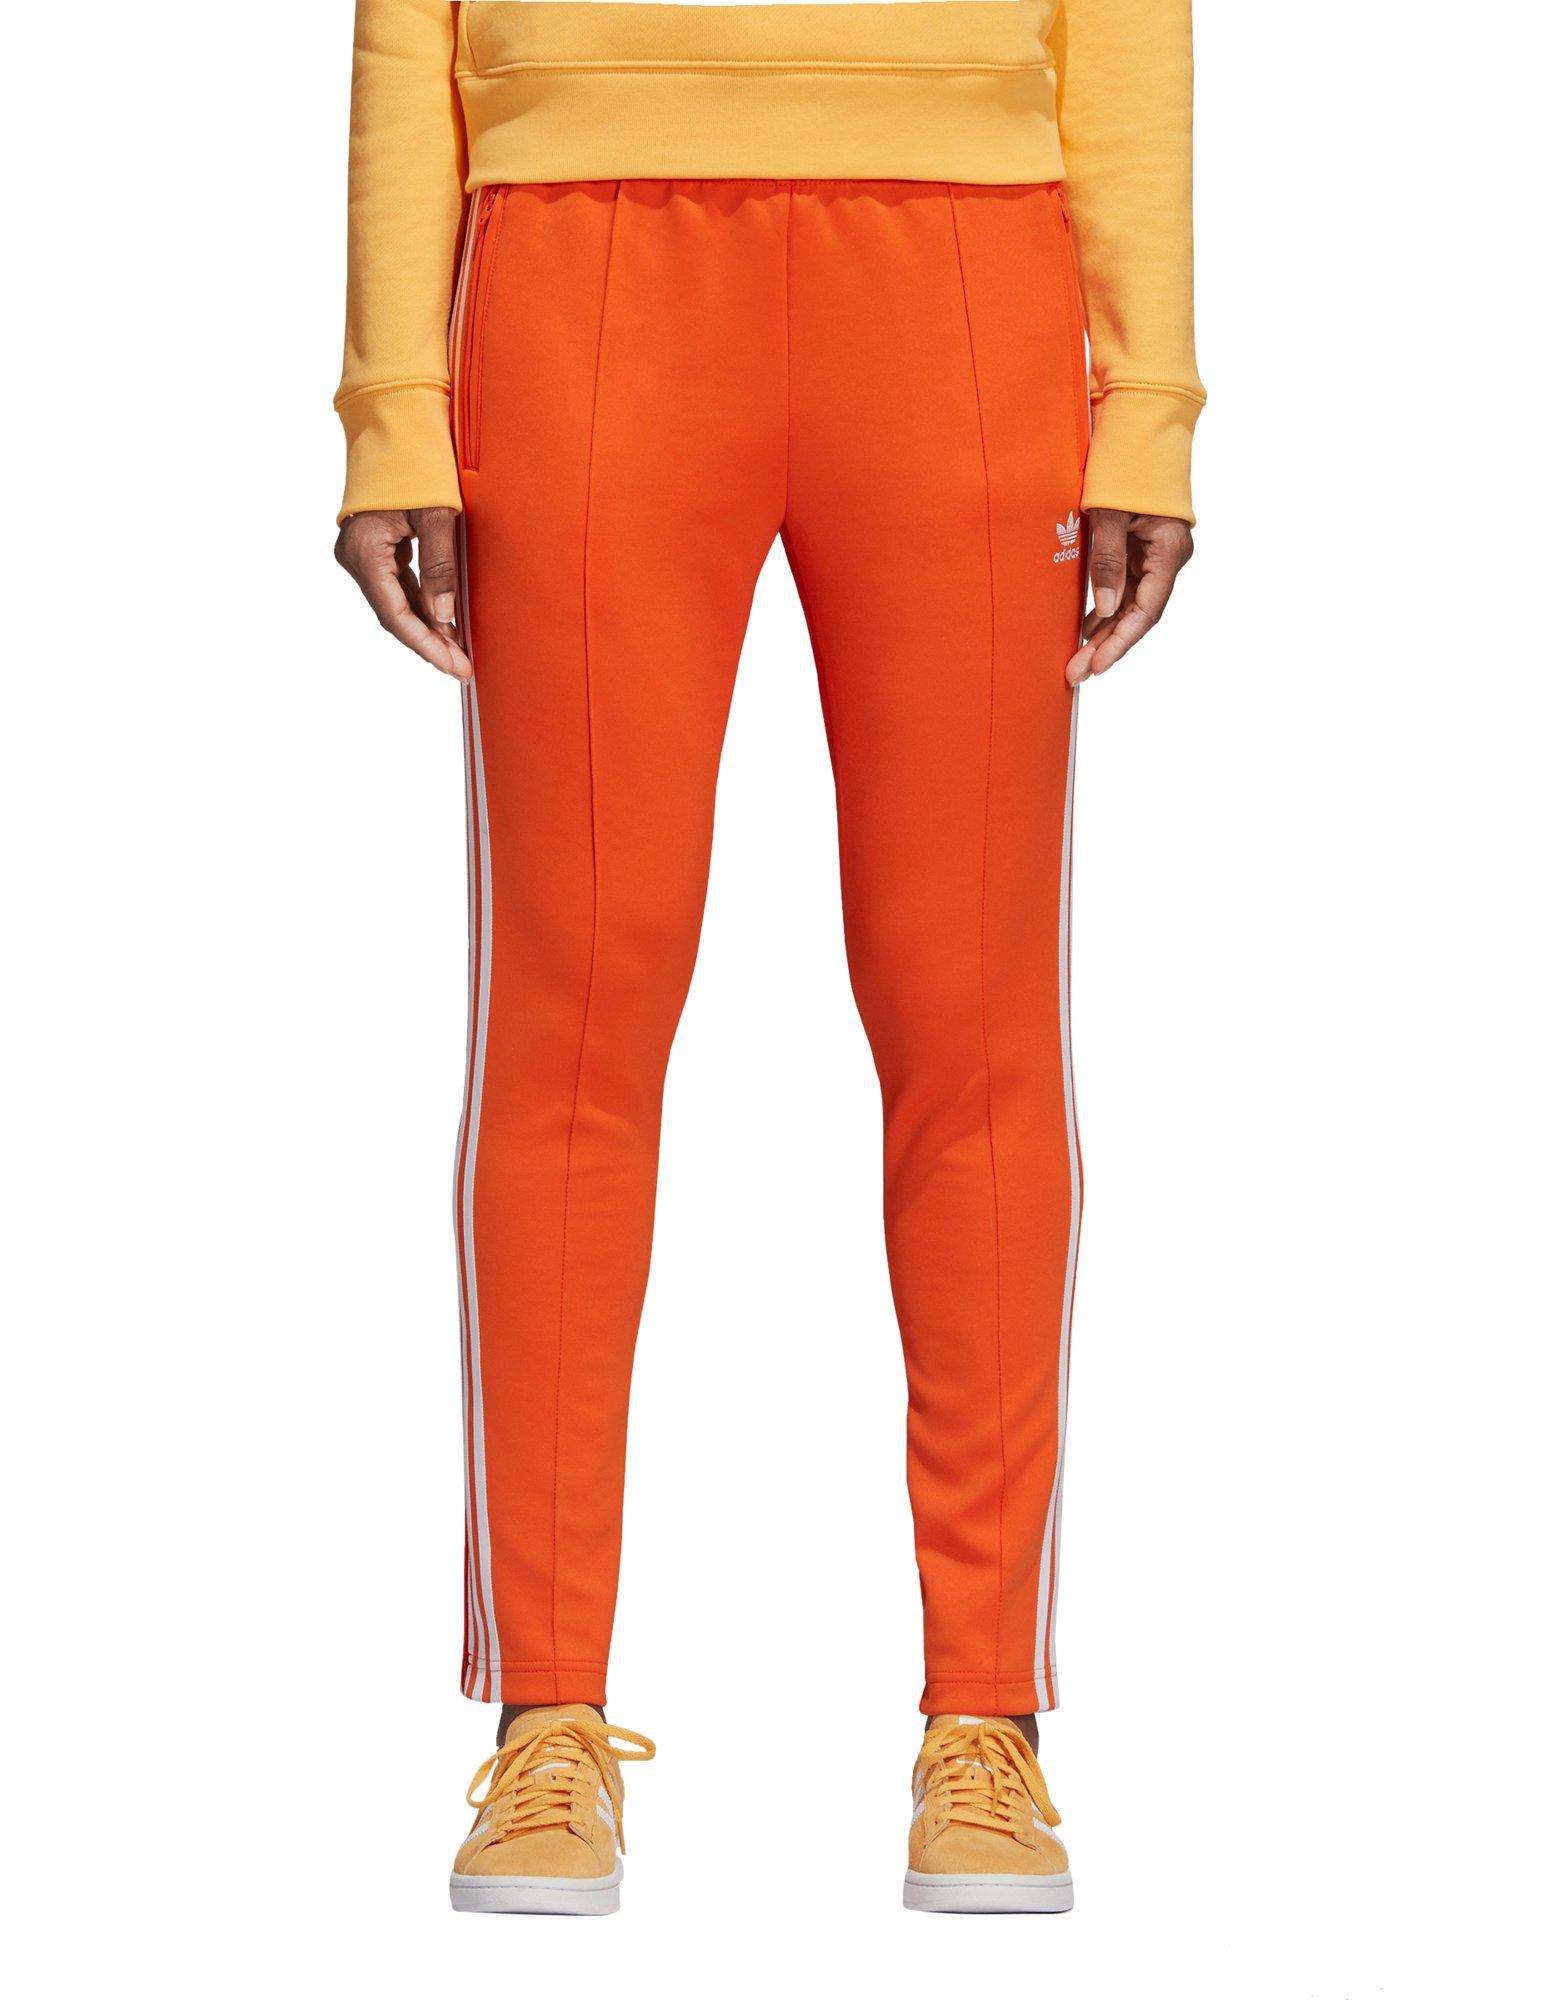 orange sst track pants